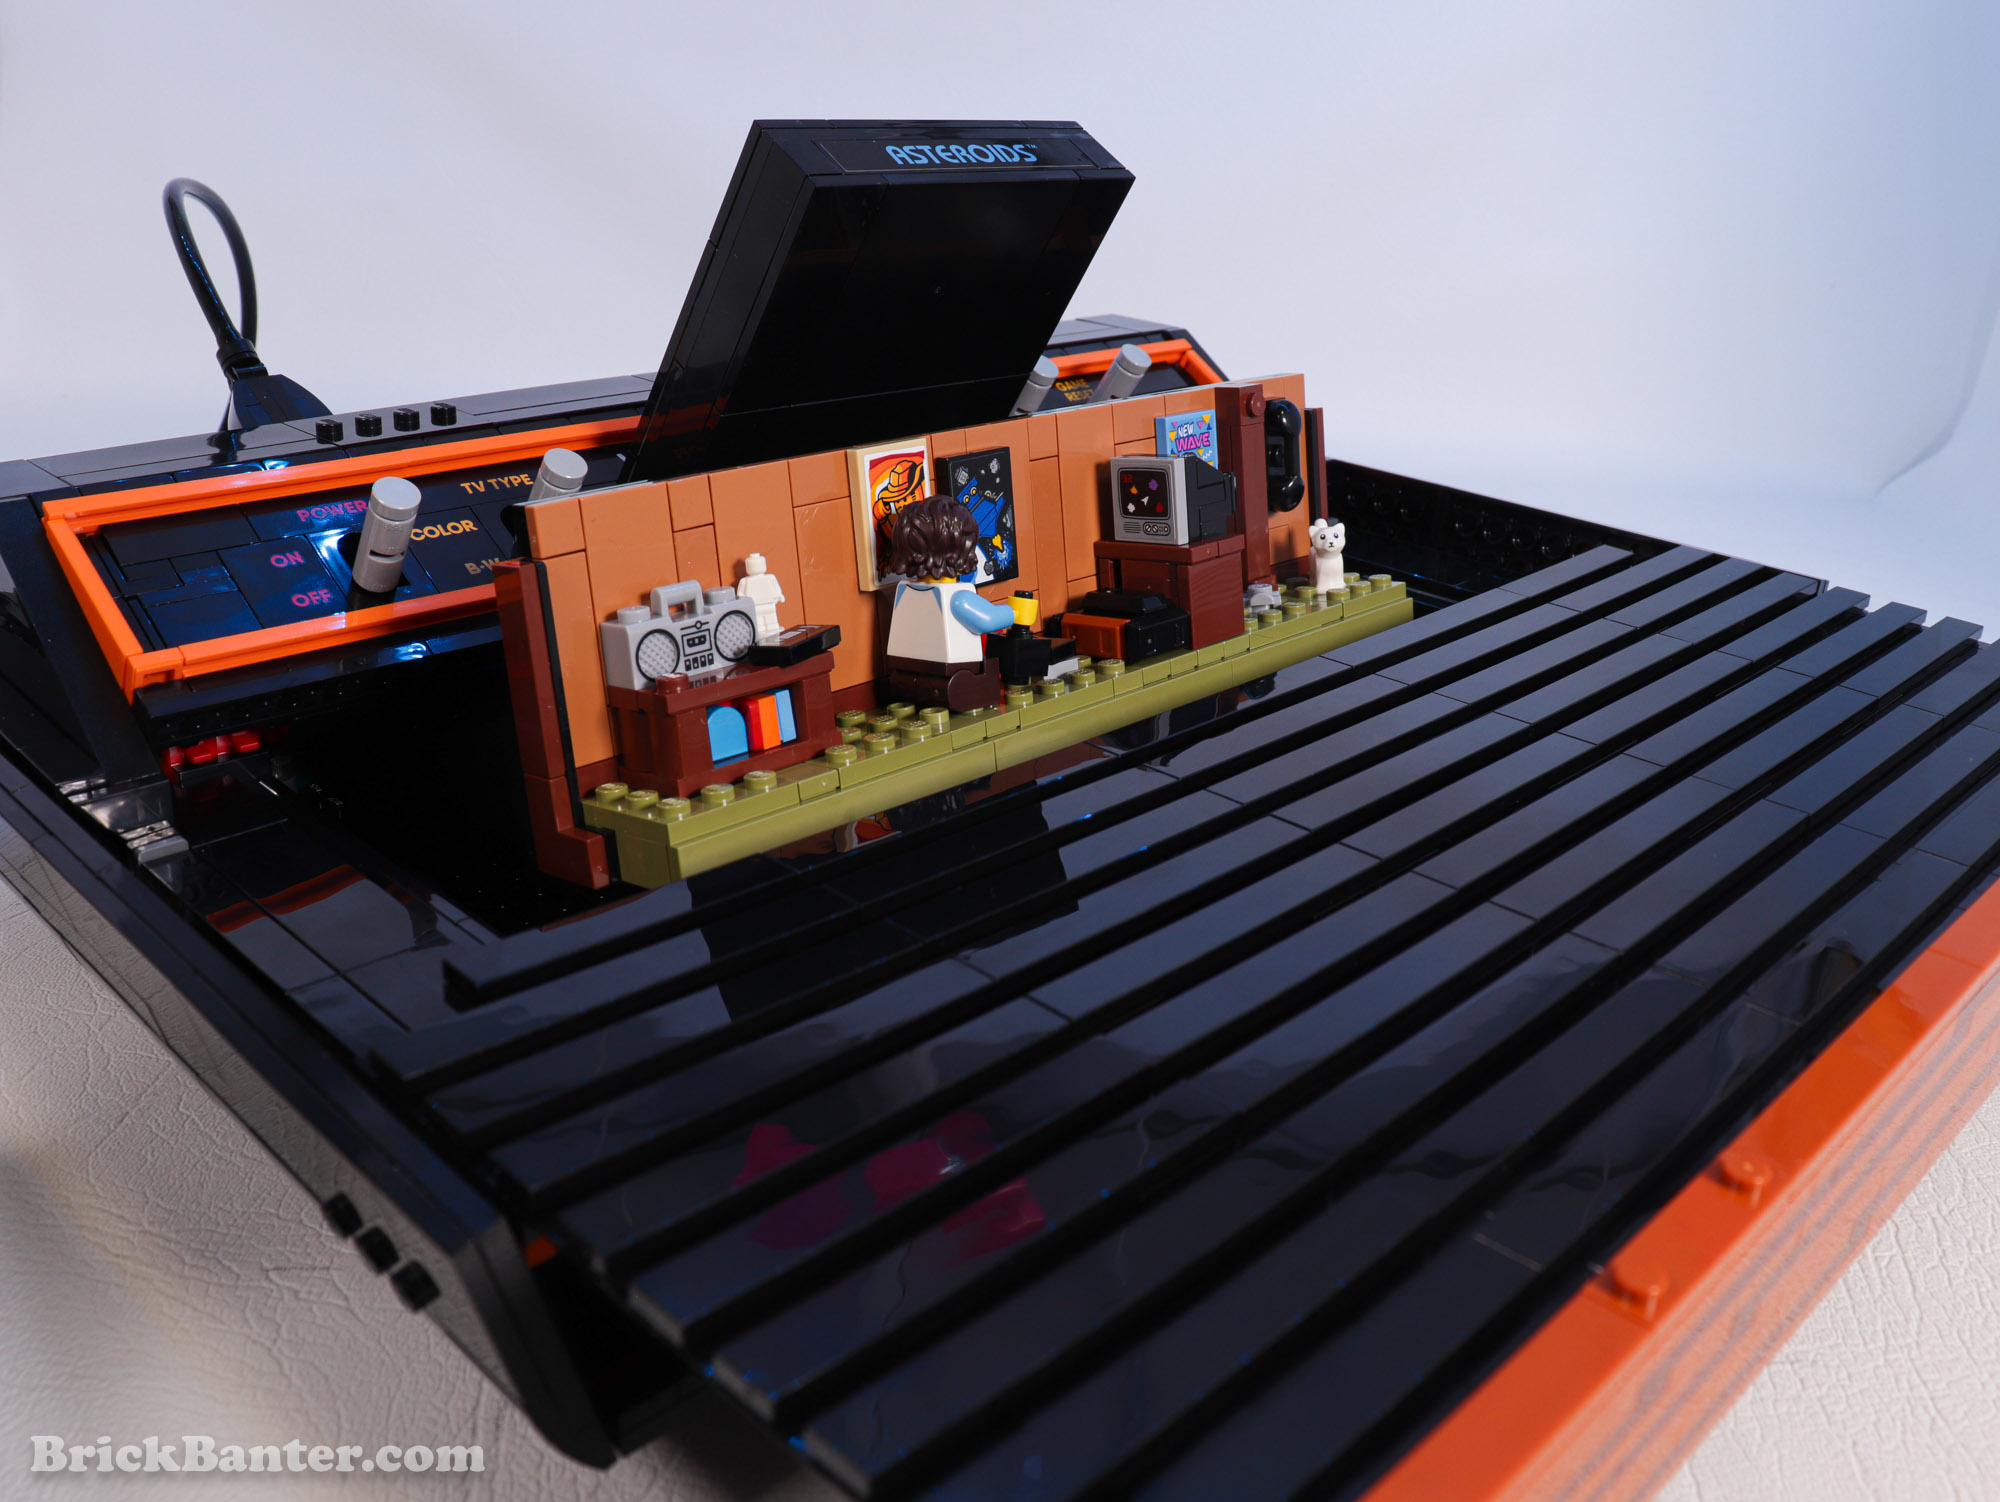 LEGO 10306 ATARI 2600 - Video Computer System - Brick Banter New Release Set Review